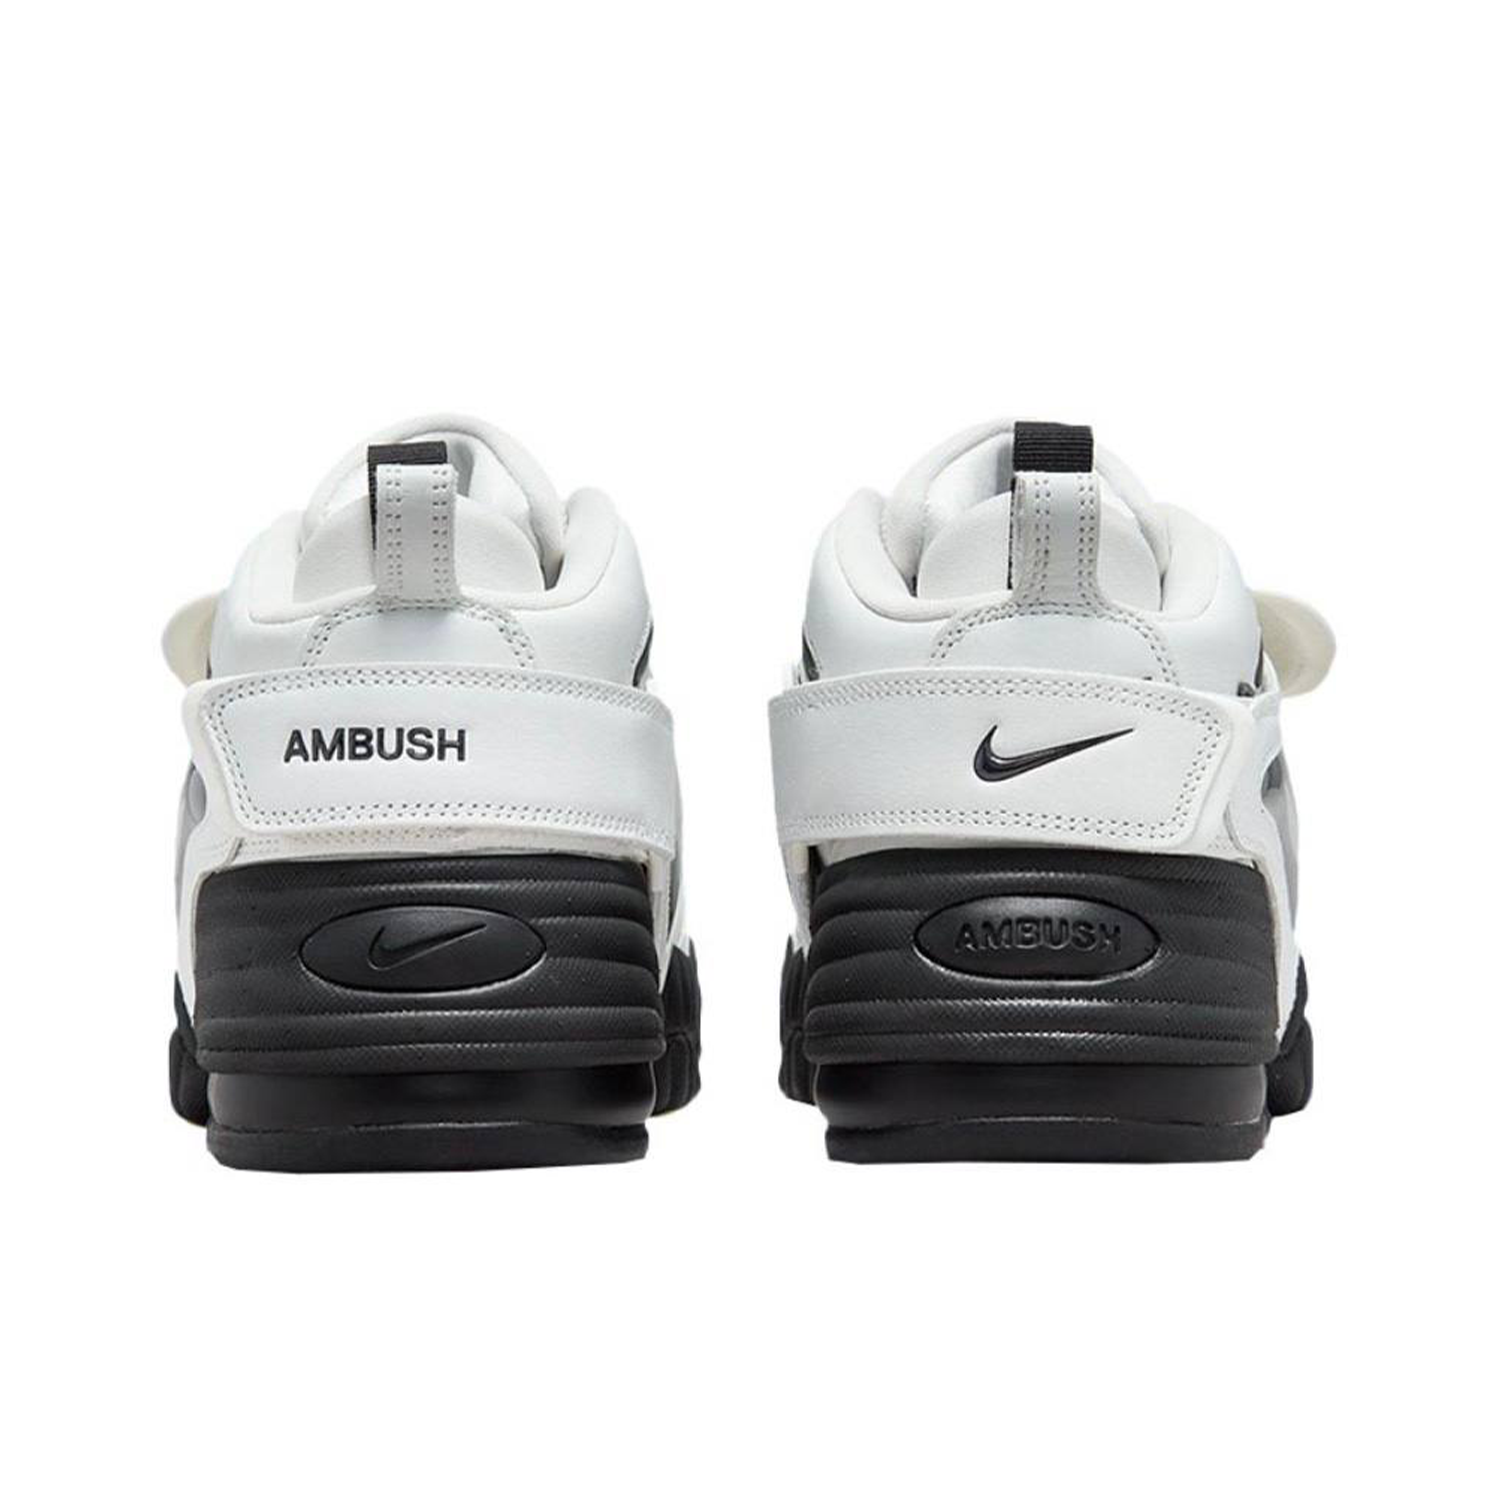 AMBUSH × Nike Air Adjust Force sp "summit white and black" (DM8465-100)